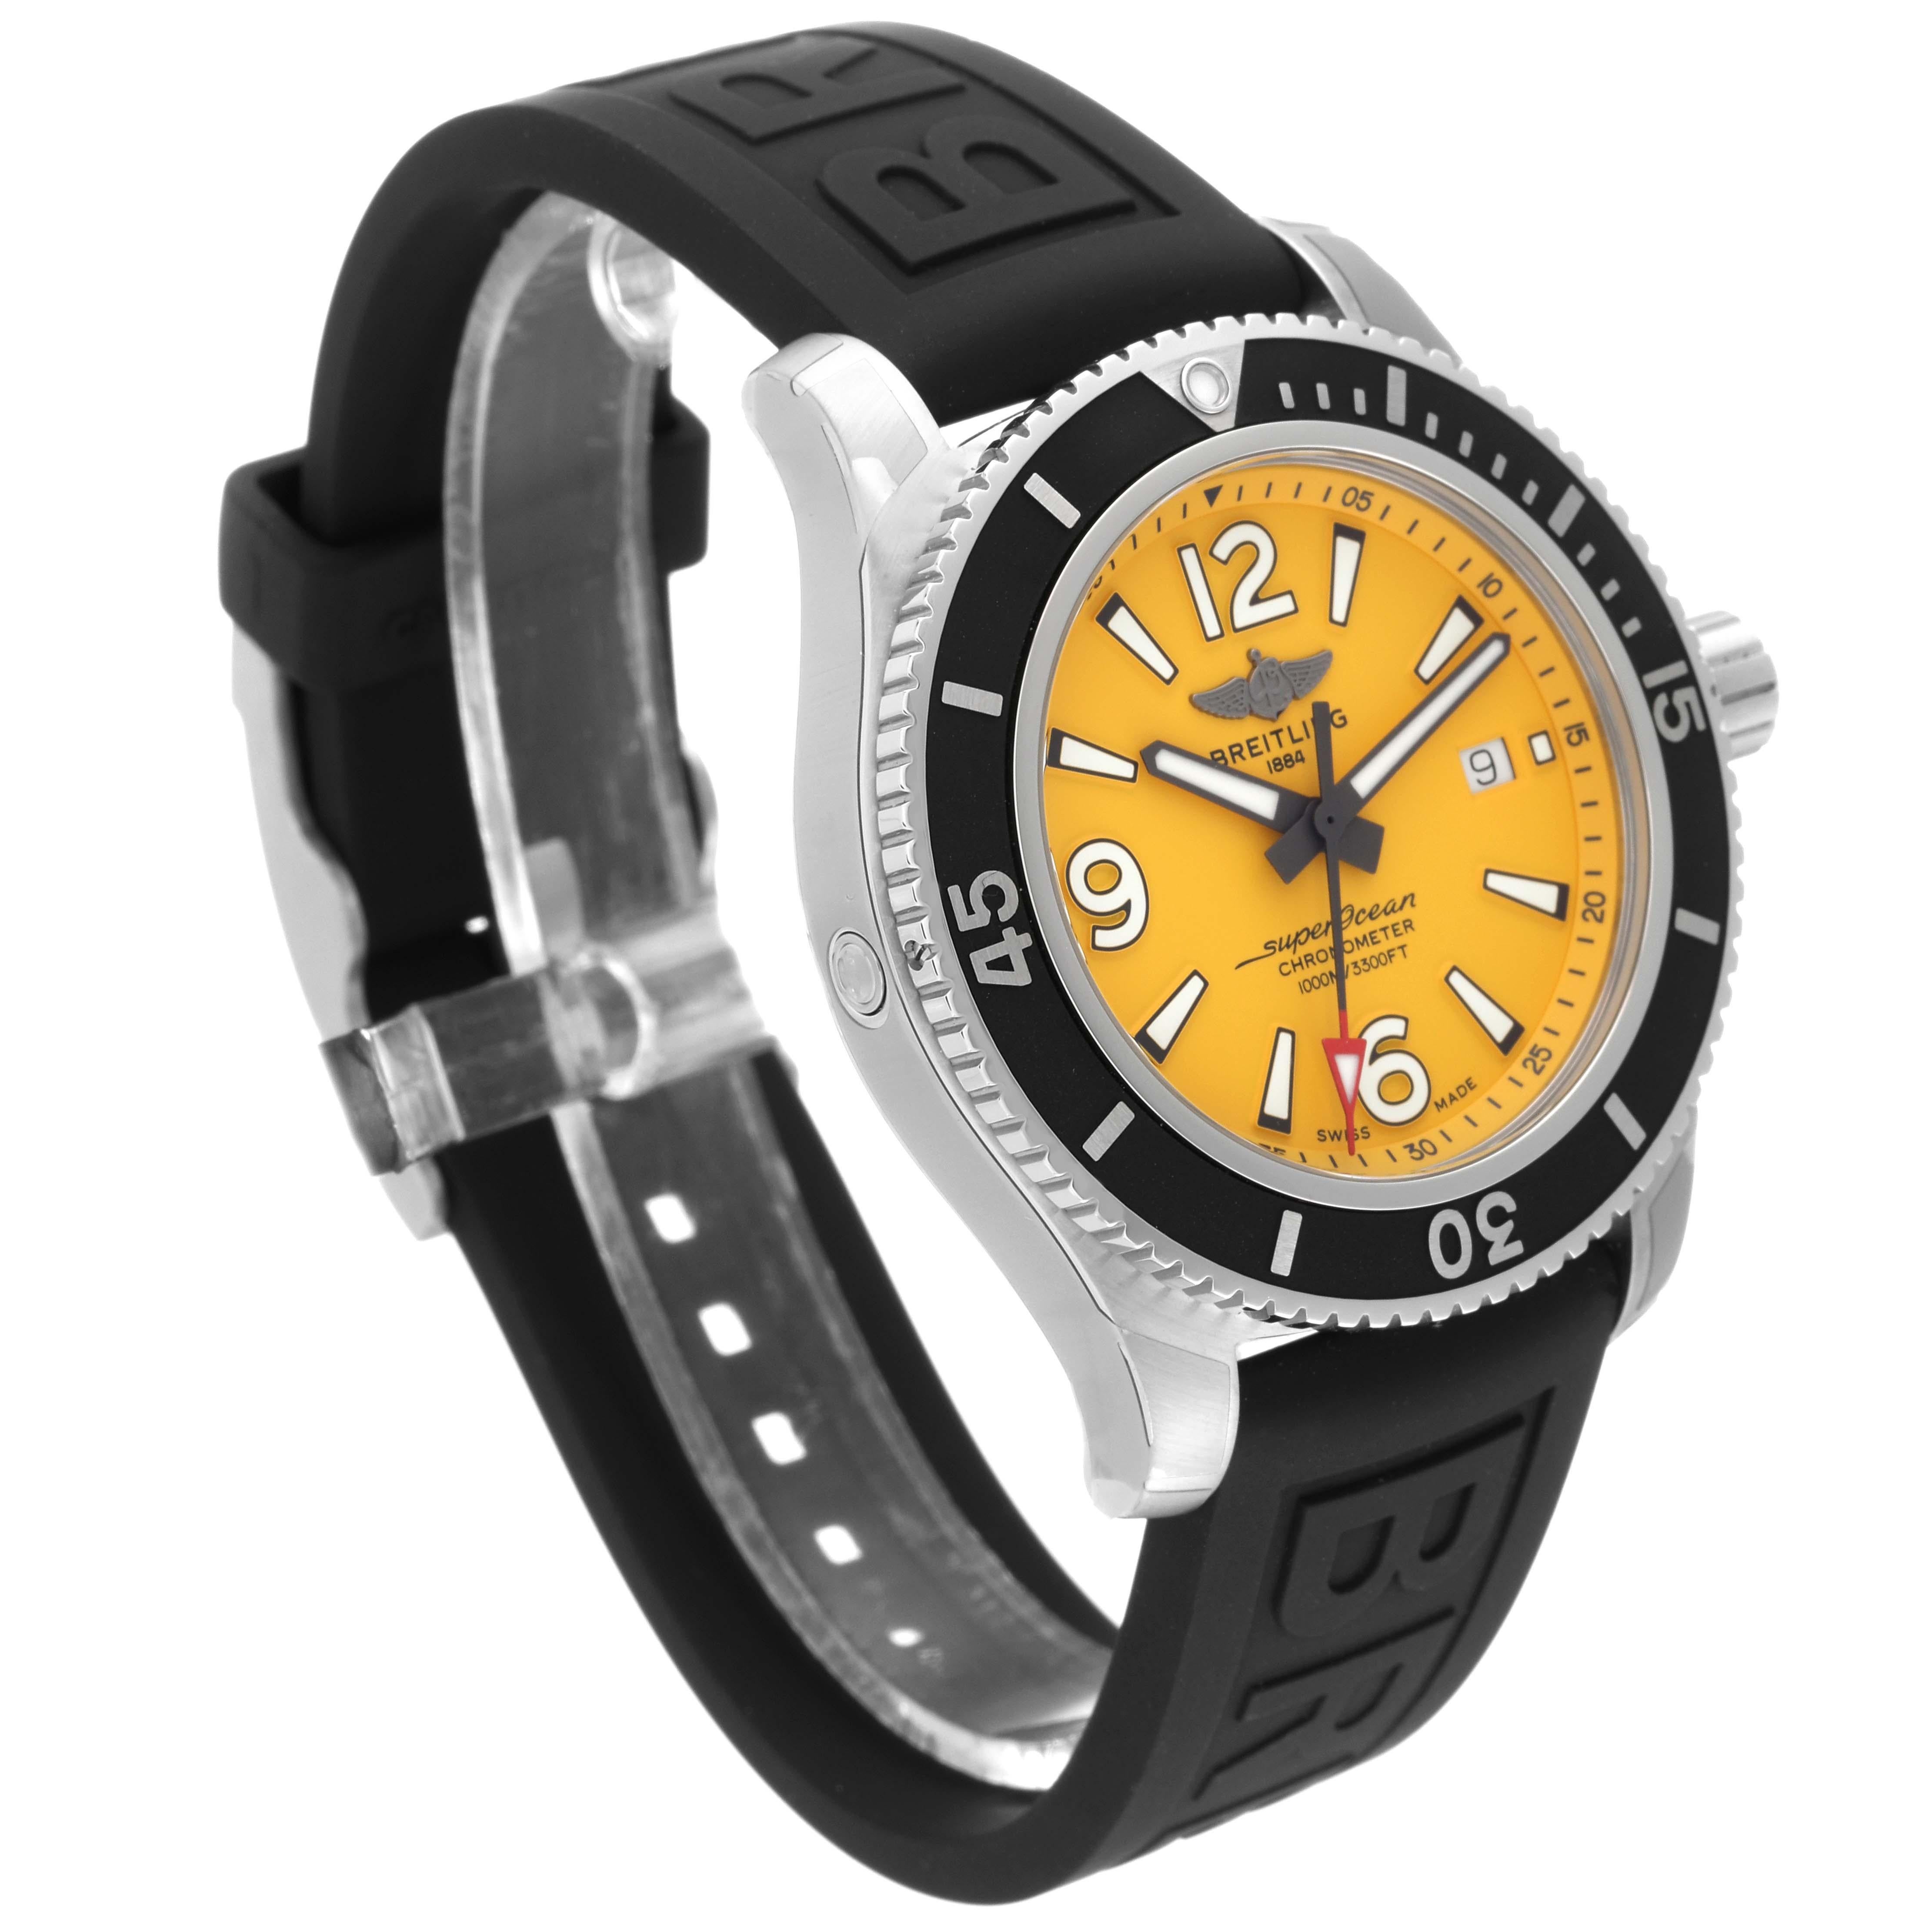 Breitling Superocean II Yellow Dial Steel Mens Watch A17367 Unworn For Sale 1